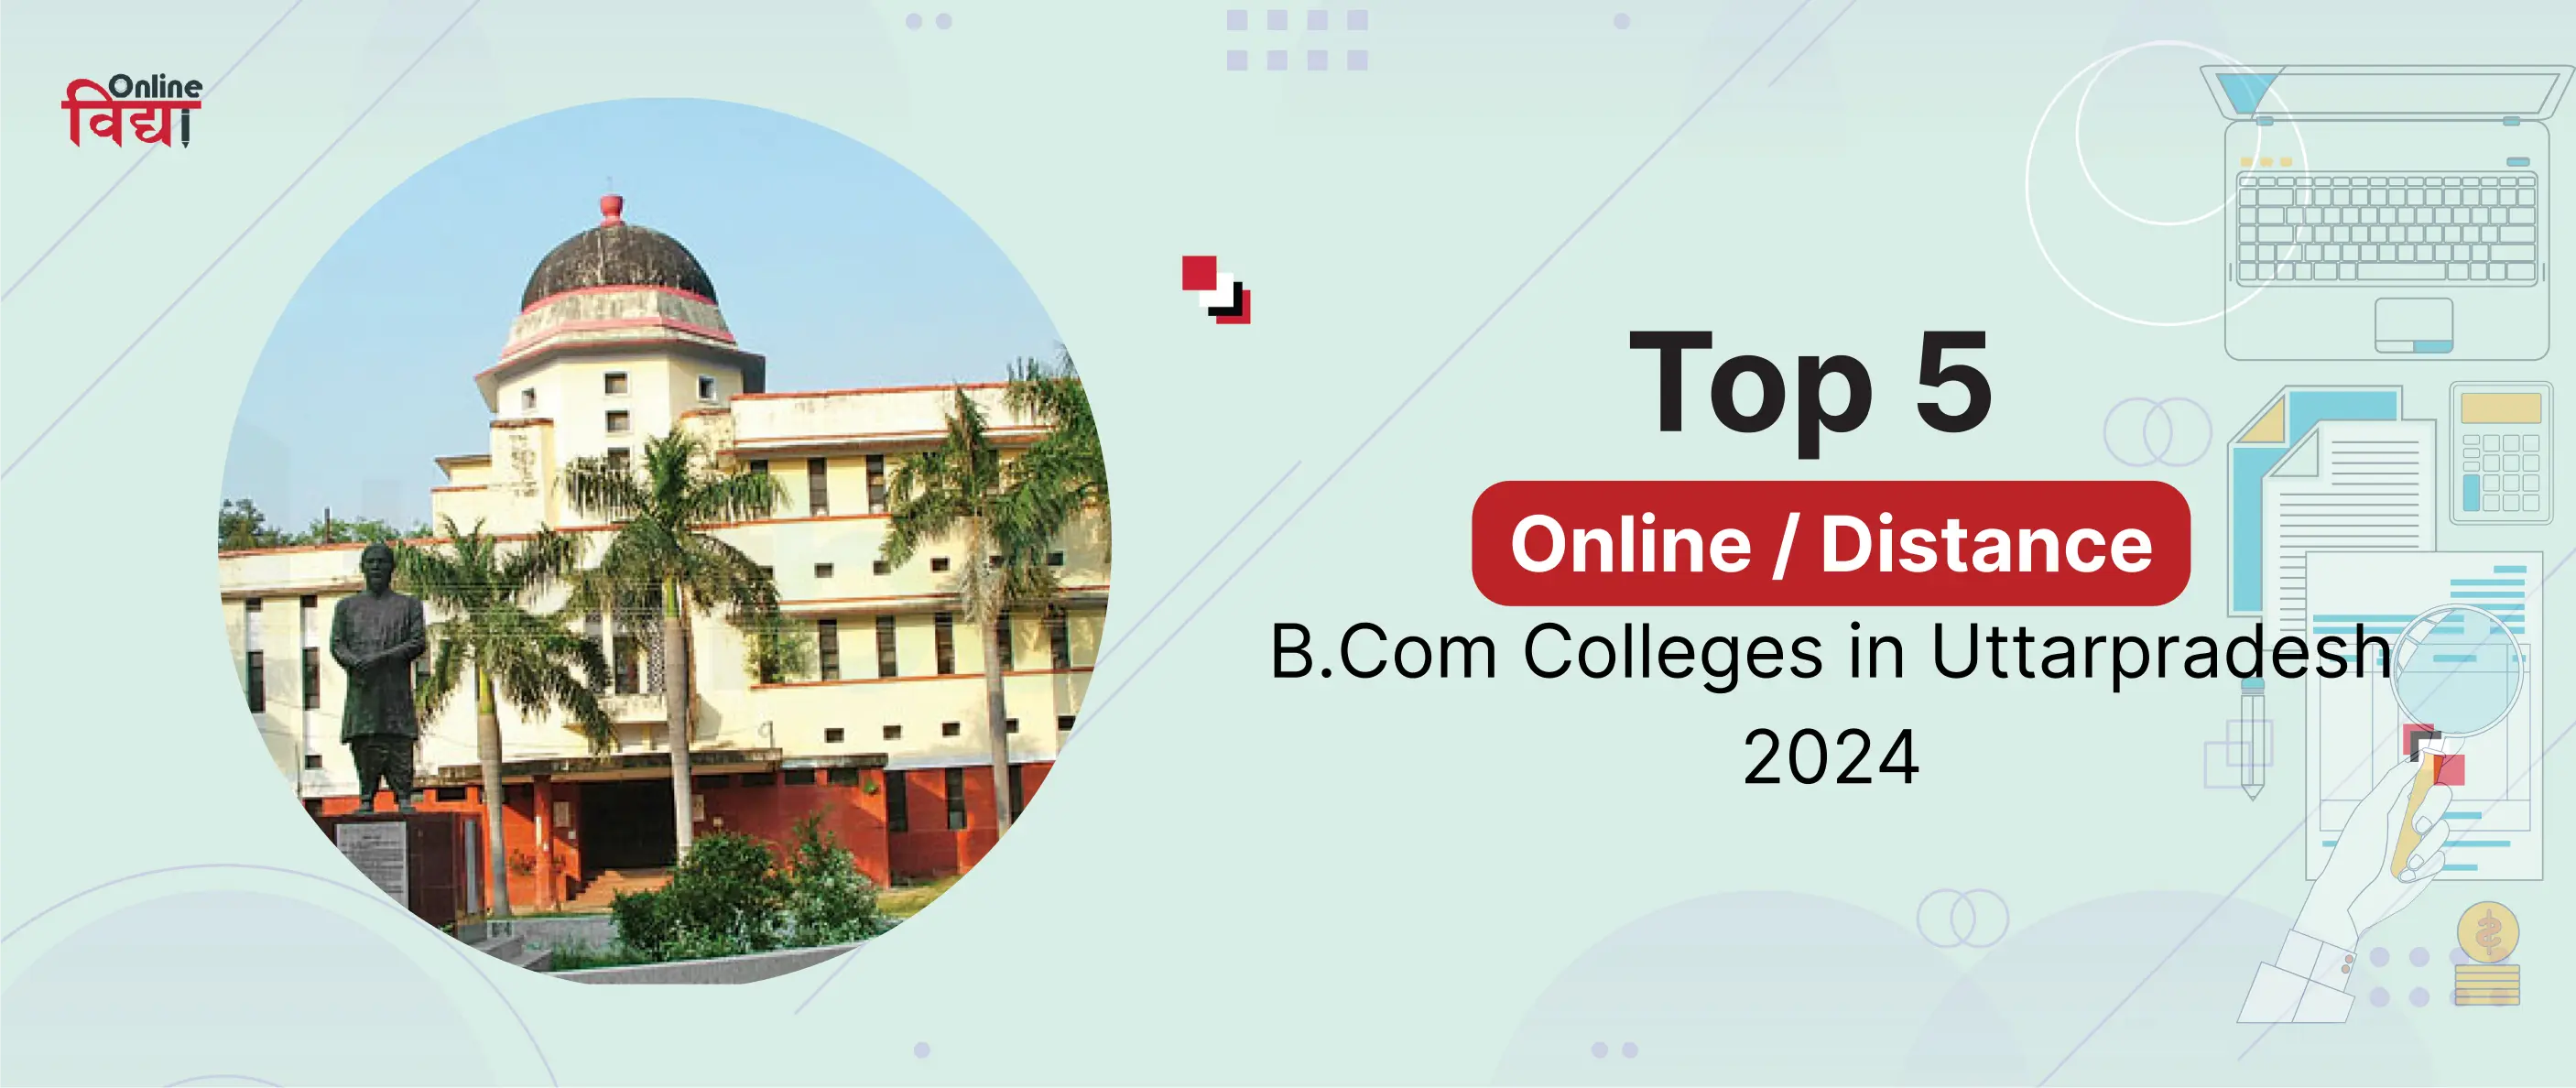 Top 5 Online/ Distance B.Com Colleges in Uttar Pradesh 2024